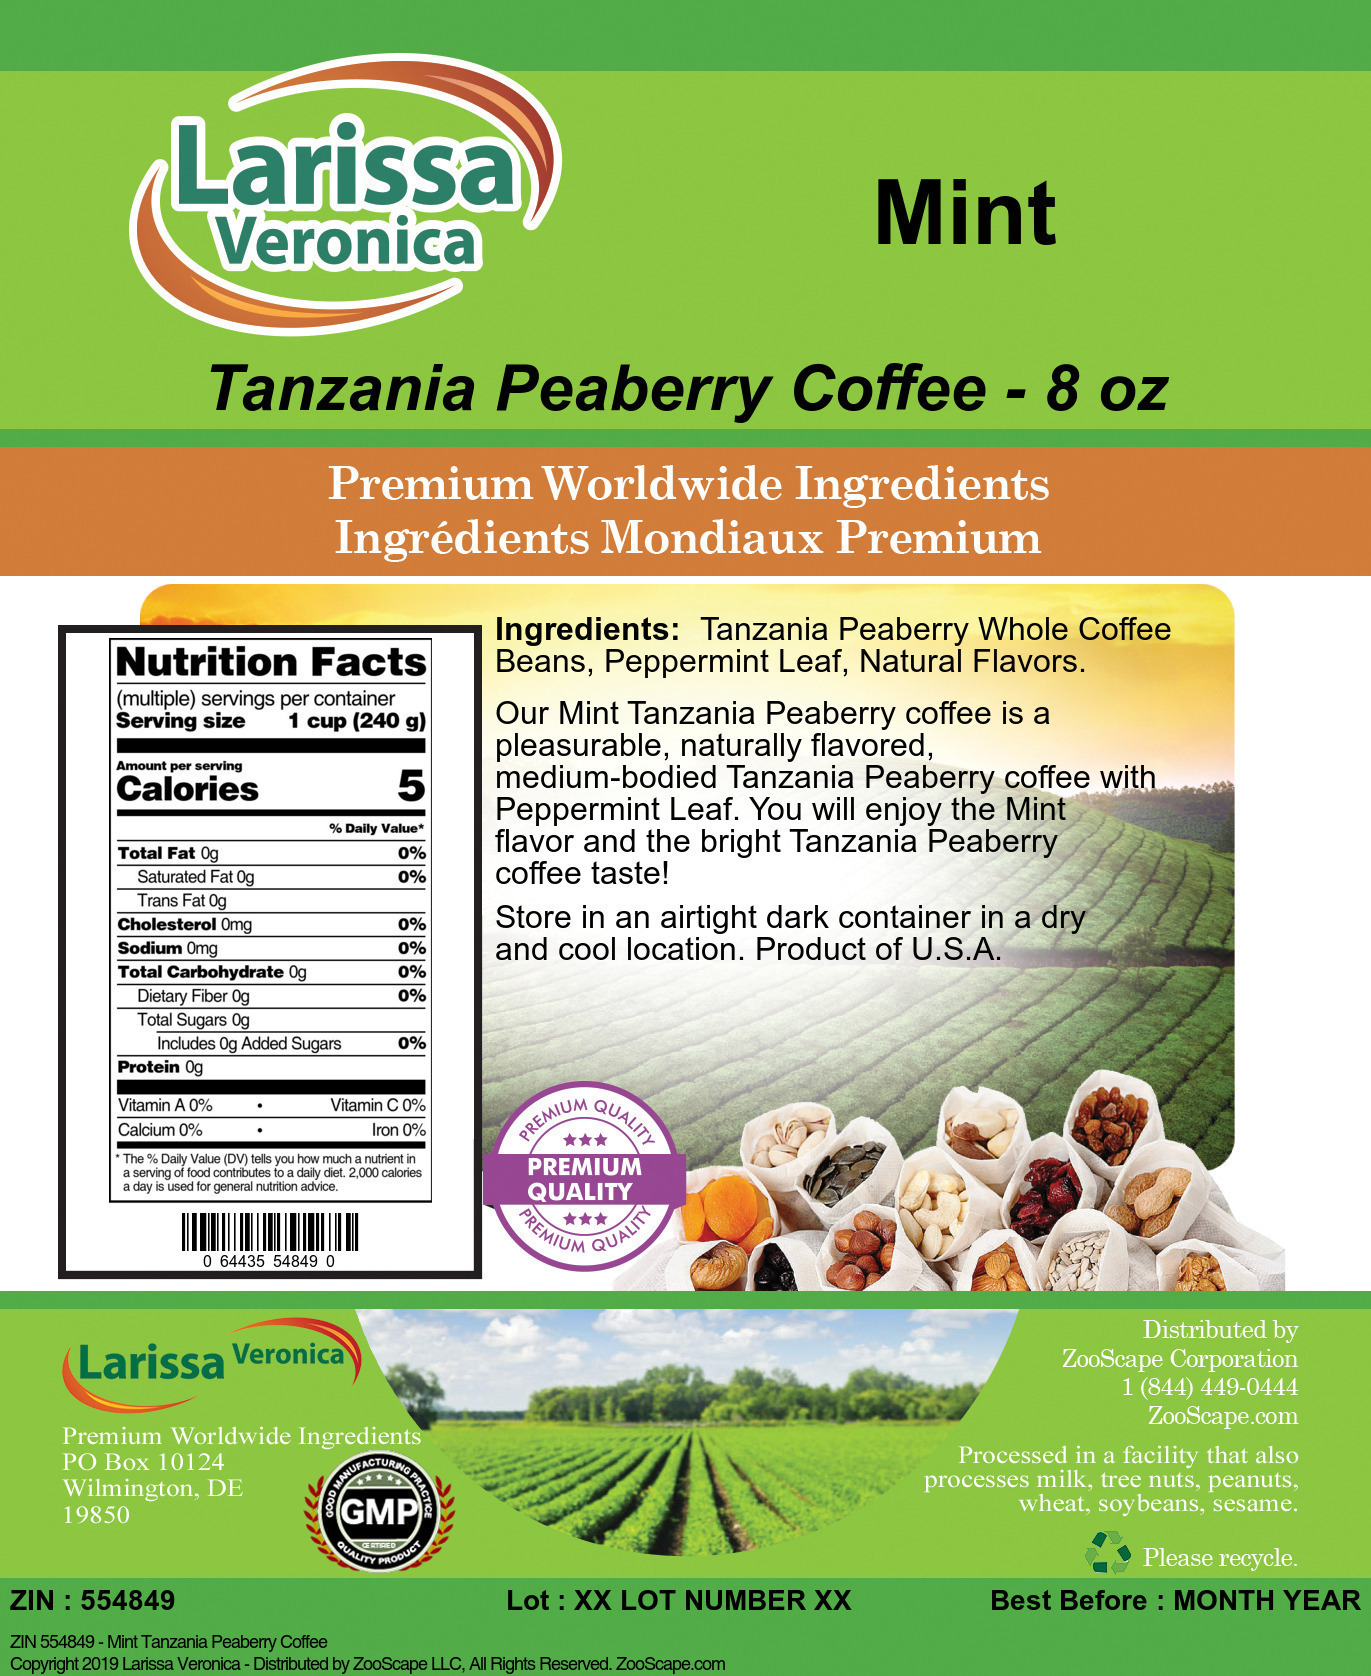 Mint Tanzania Peaberry Coffee - Label